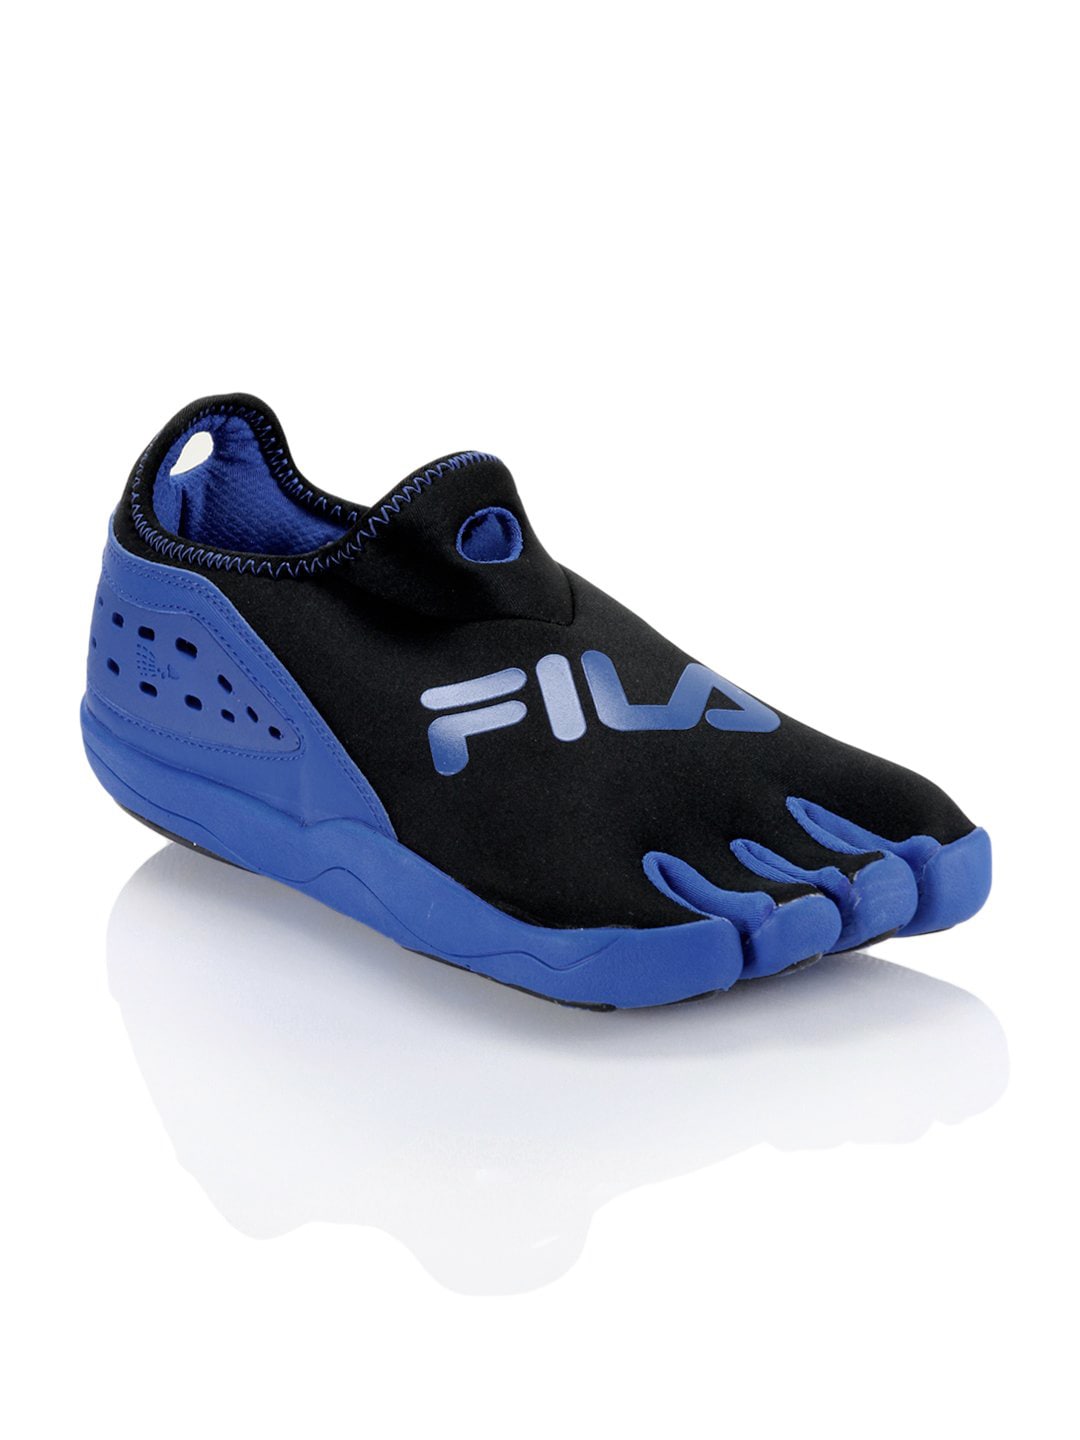 Fila Unisex Skeletoes Trifit Black & Blue Shoes